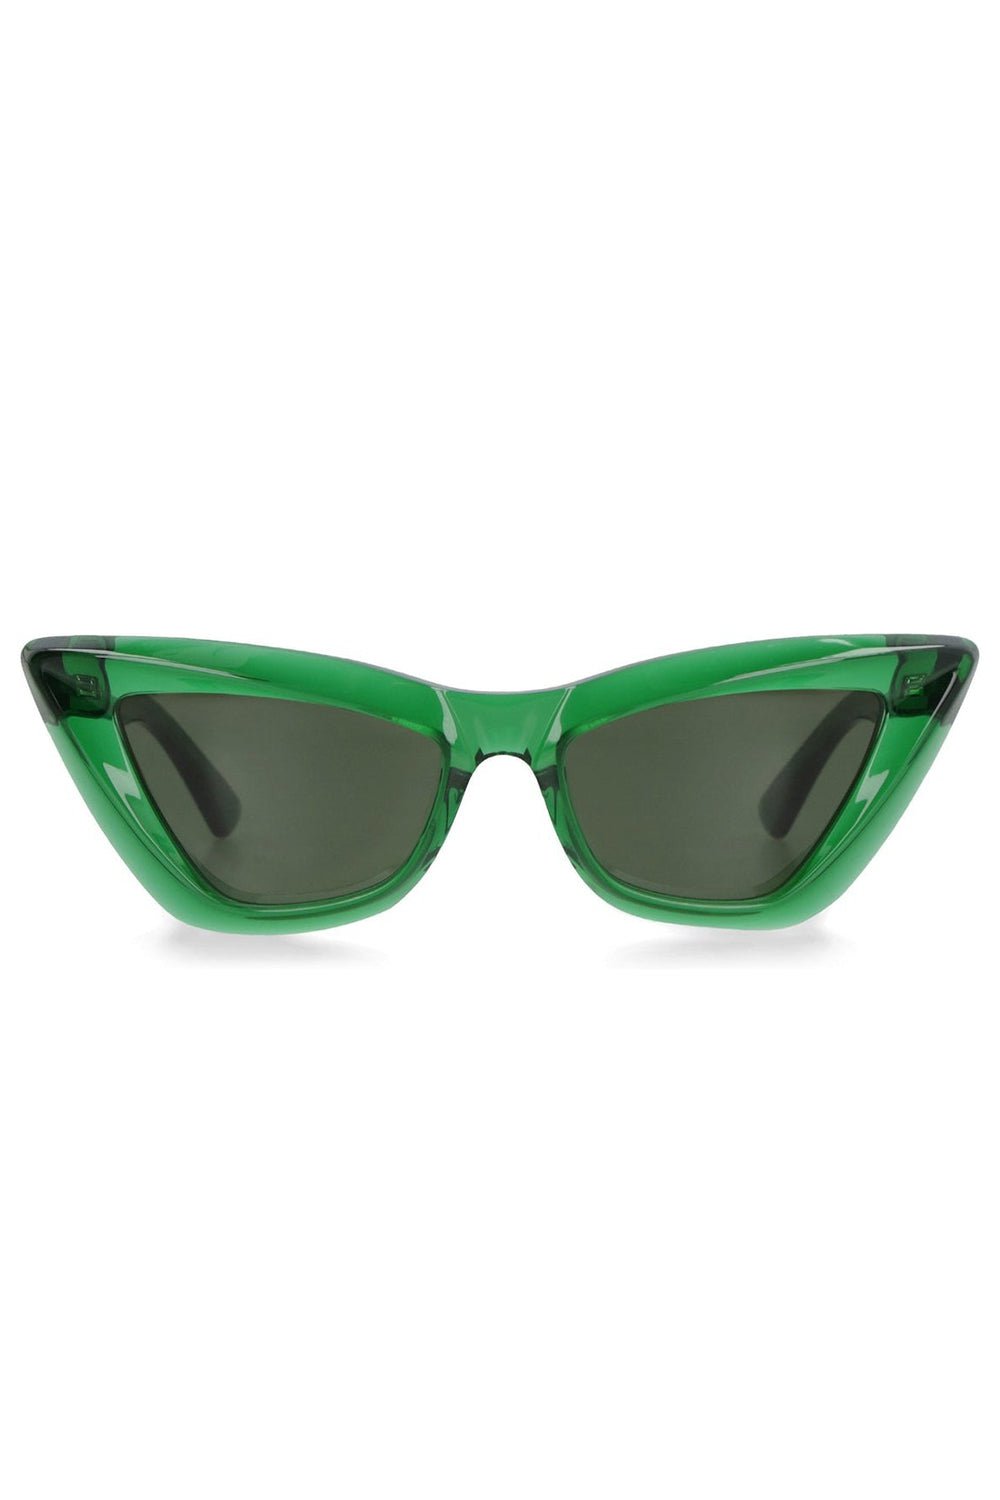 BOTTEGA VENETA-Angle Cat Eye Sunglasses-GREEN/GREEN